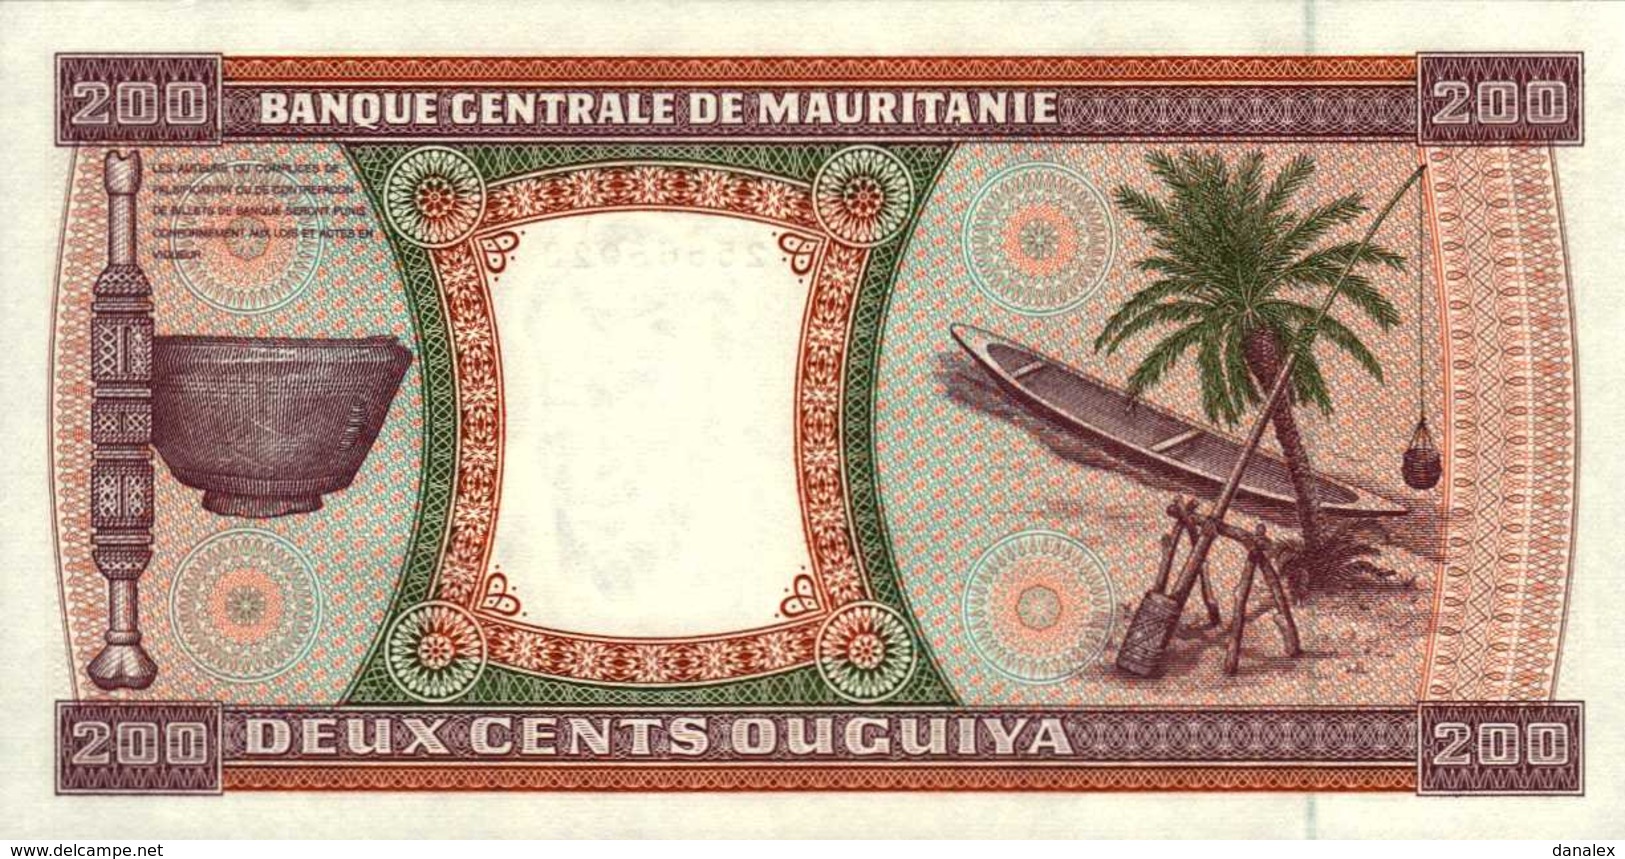 MAURITANIE 200 OUGUIYA Du 28-11-1996 Pick 5g  UNC/NEUF - Mauritanie